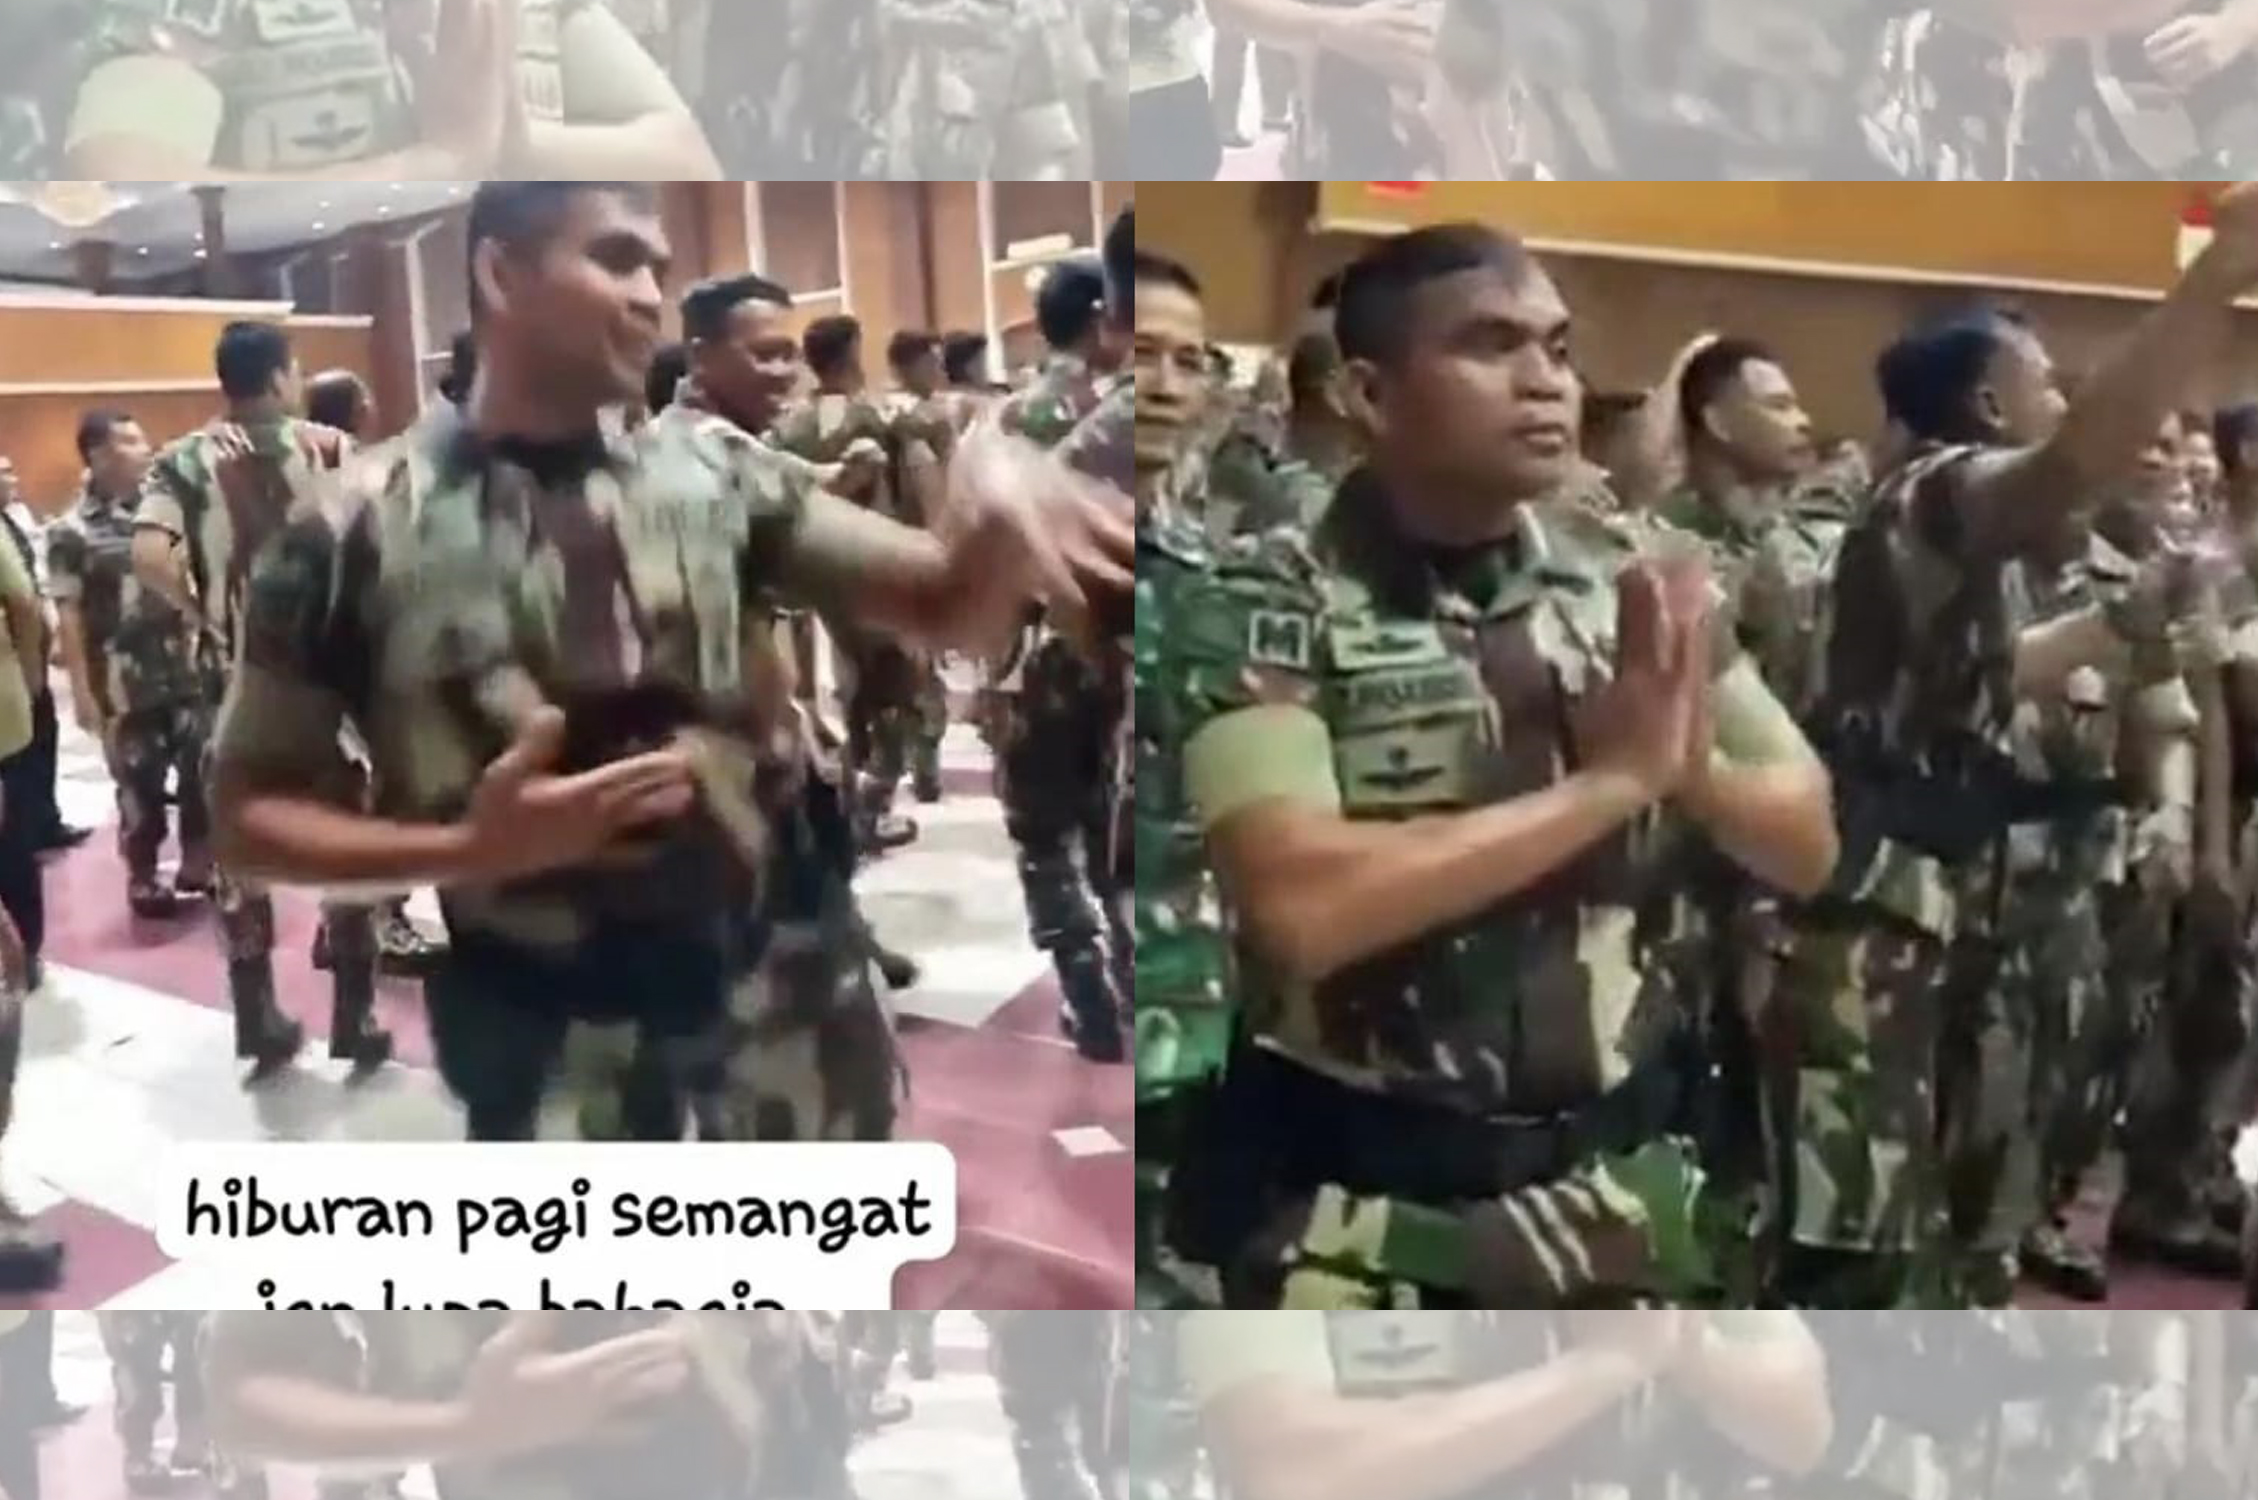 KOCAK! TNI Joget Ala Dancer Profesional, Warganet: Semangat Pak Tentara, Hilangkan Sejenak Rasa Lelahmu